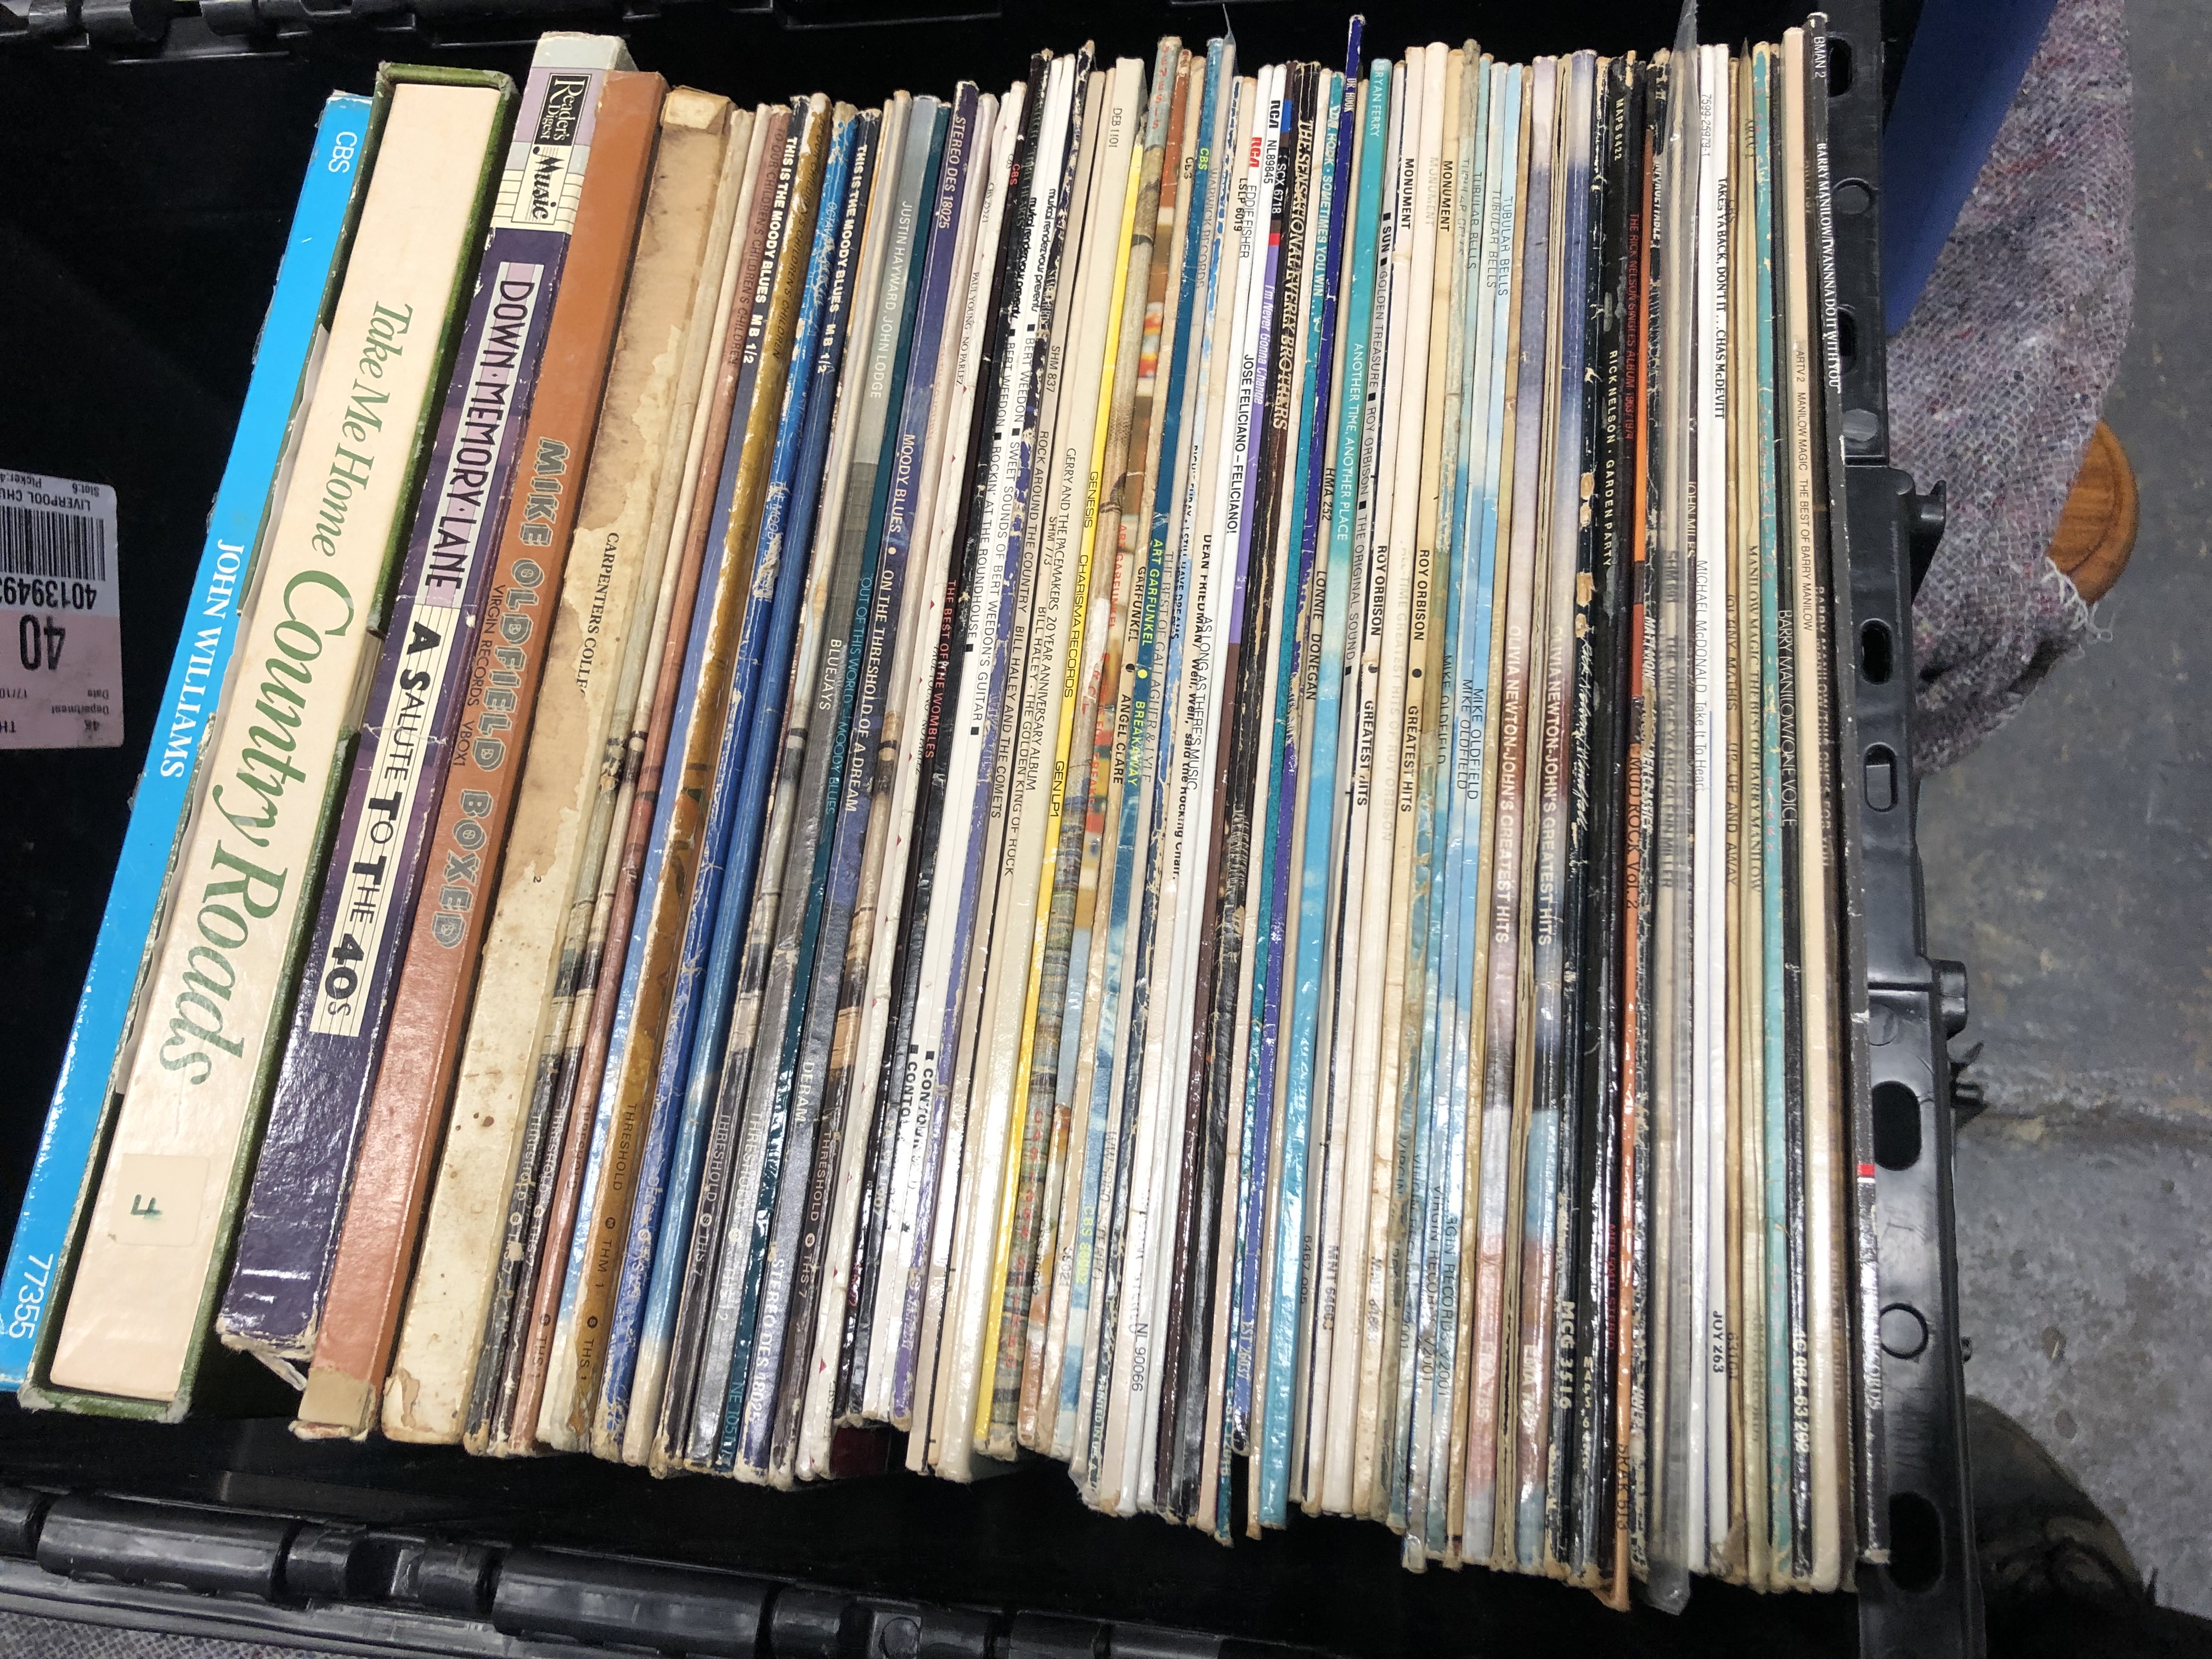 70+ ROCK AND POP LPs PLUS A SELCTIN OF LP BOX SETS - 1970s/1980s